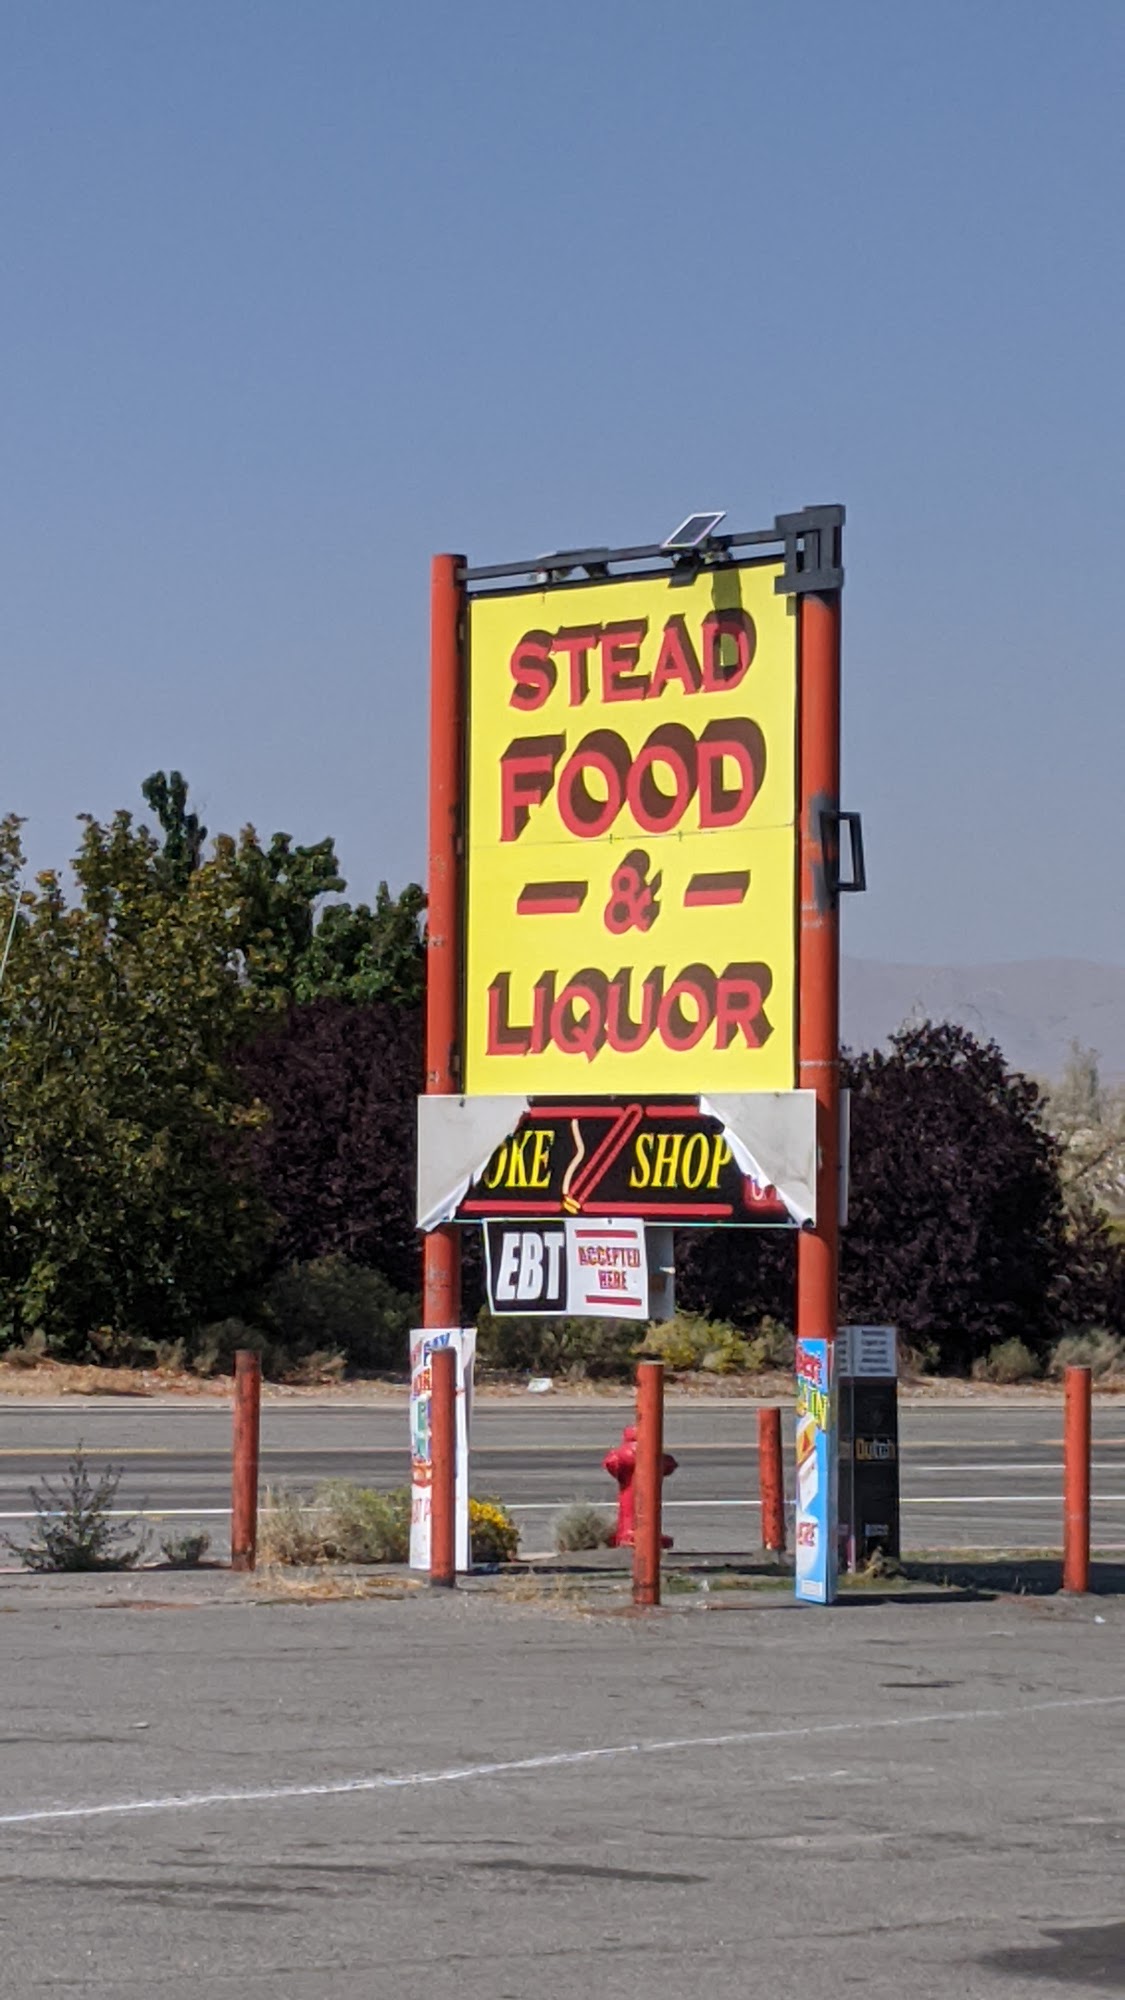 Stead food and liquor